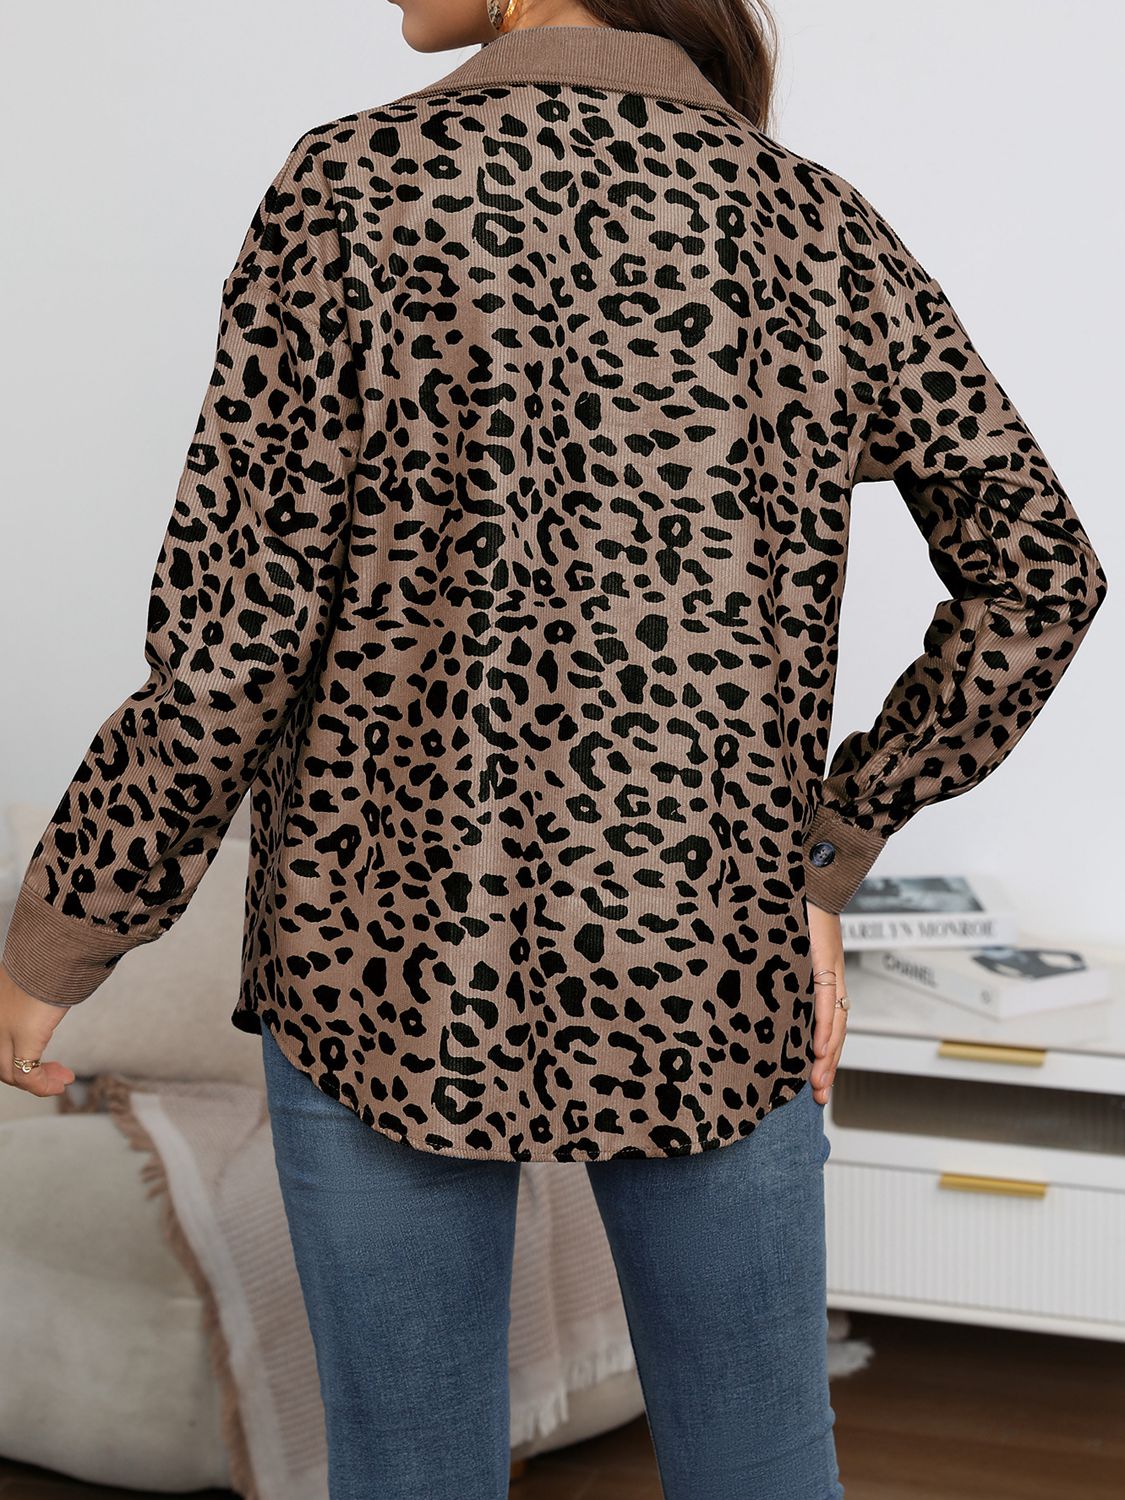 Damaris Leopard Buttoned Jacket